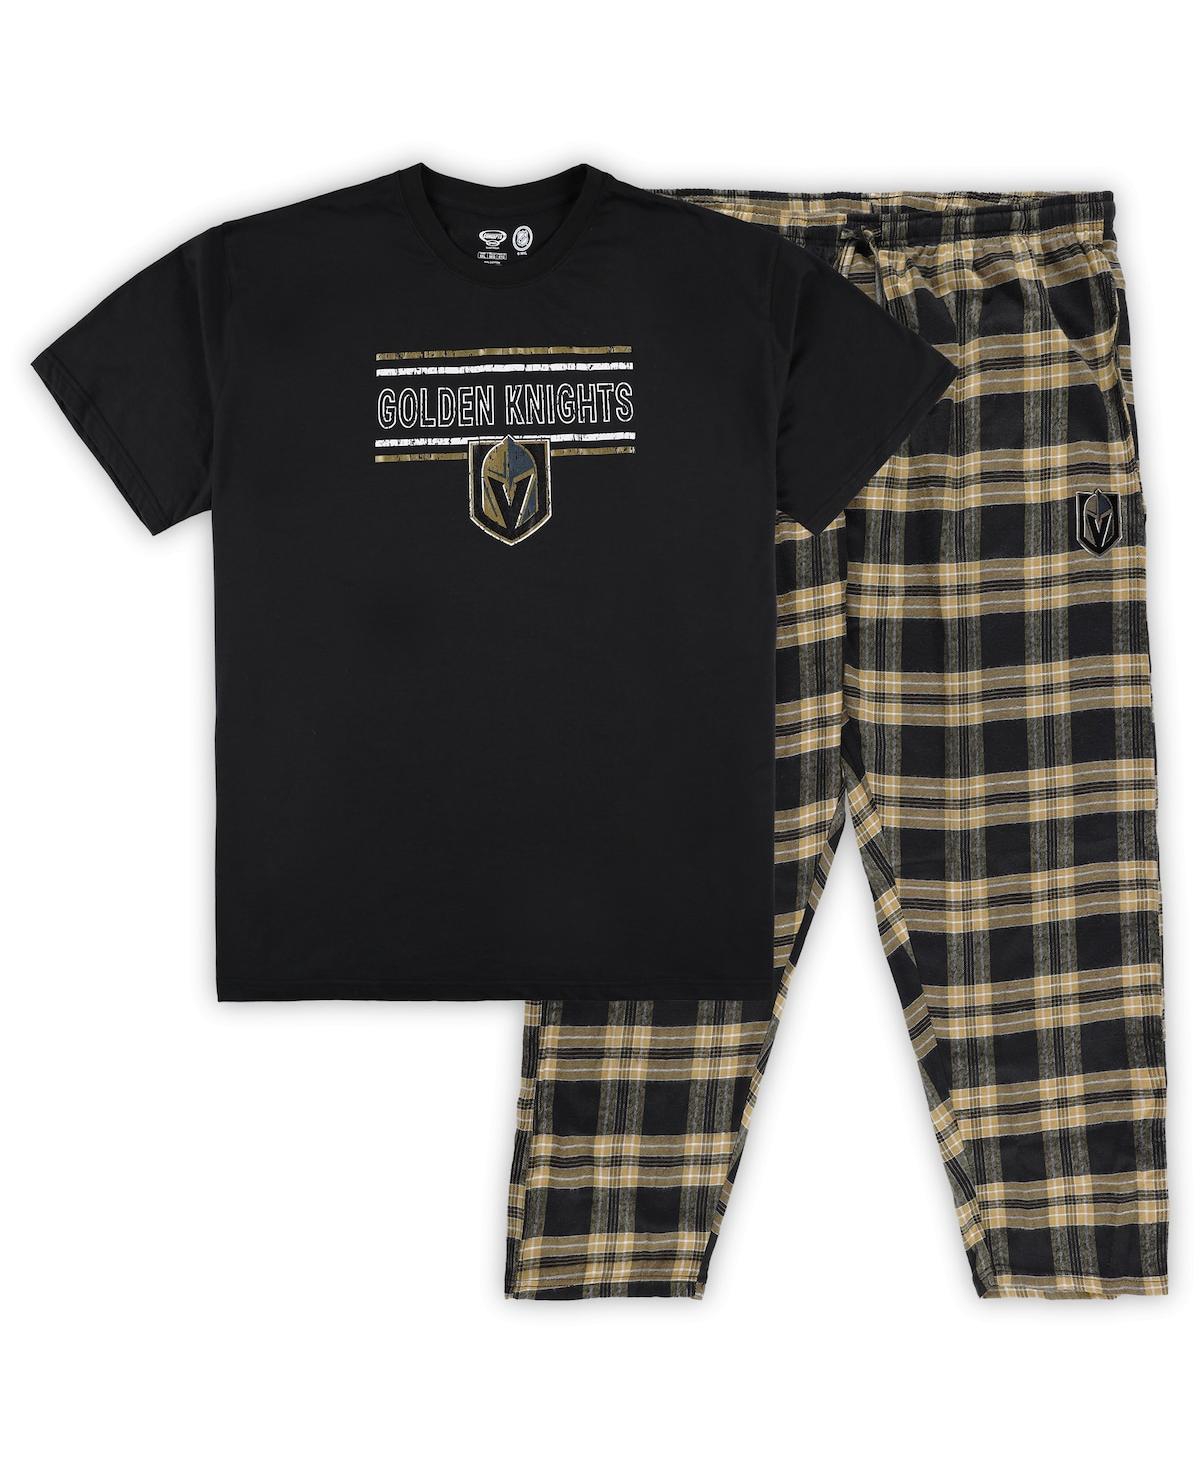 Men's Black, Gold Vegas Golden Knights Big and Tall T-shirt and Pajama Pants Sleep Set - Black, Gold